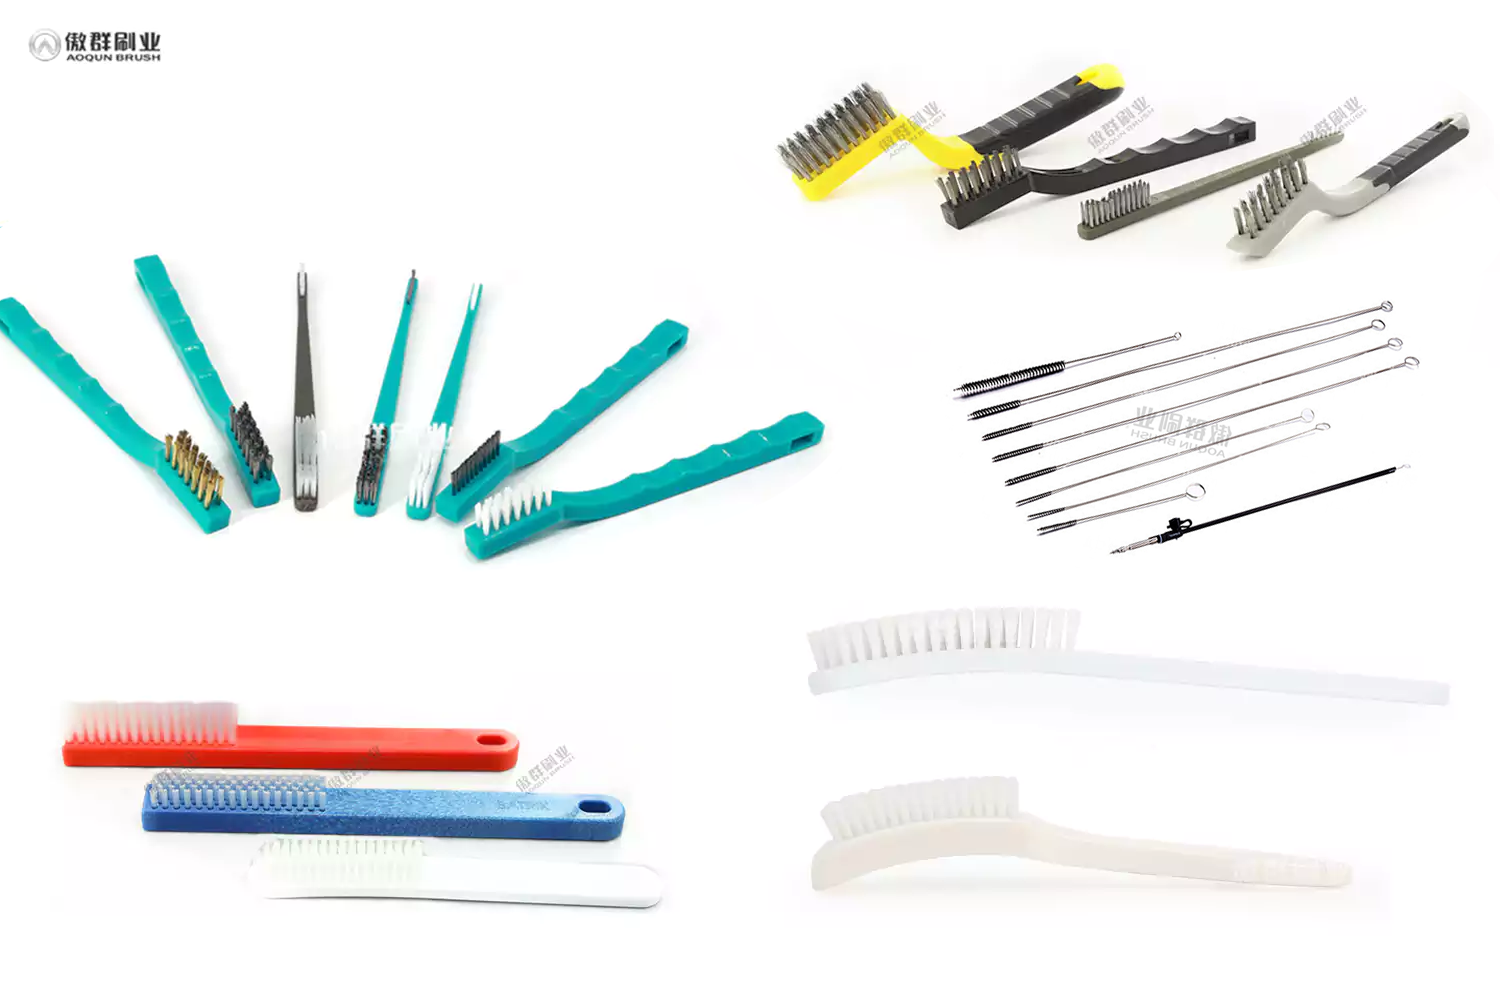 General Medical Cleaning Brush Kit